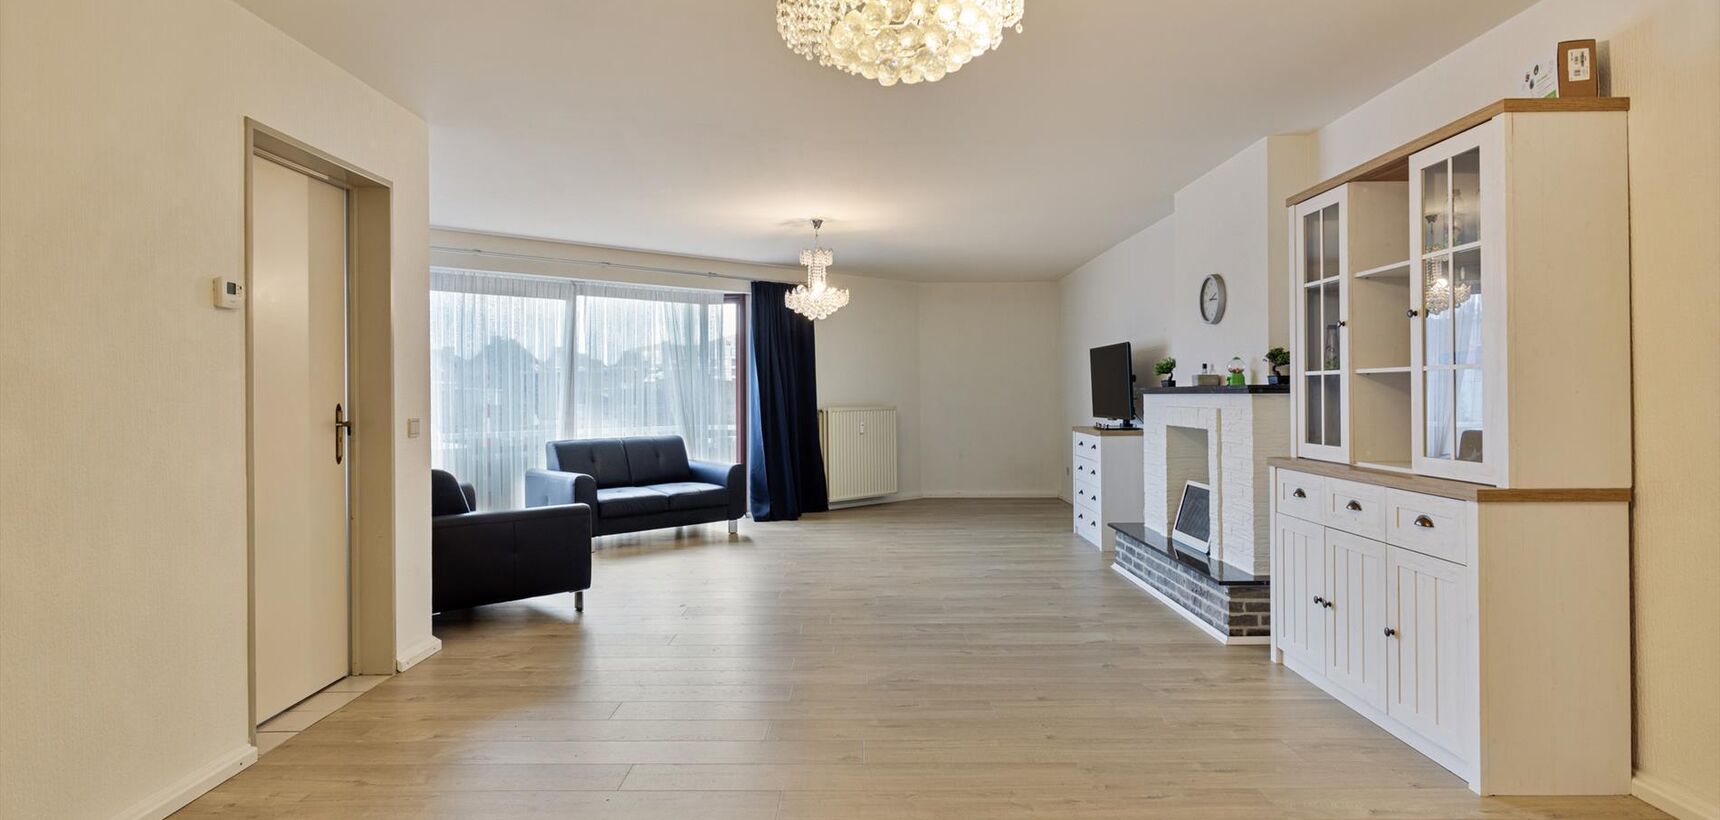 Appartement te koop in Turnhout